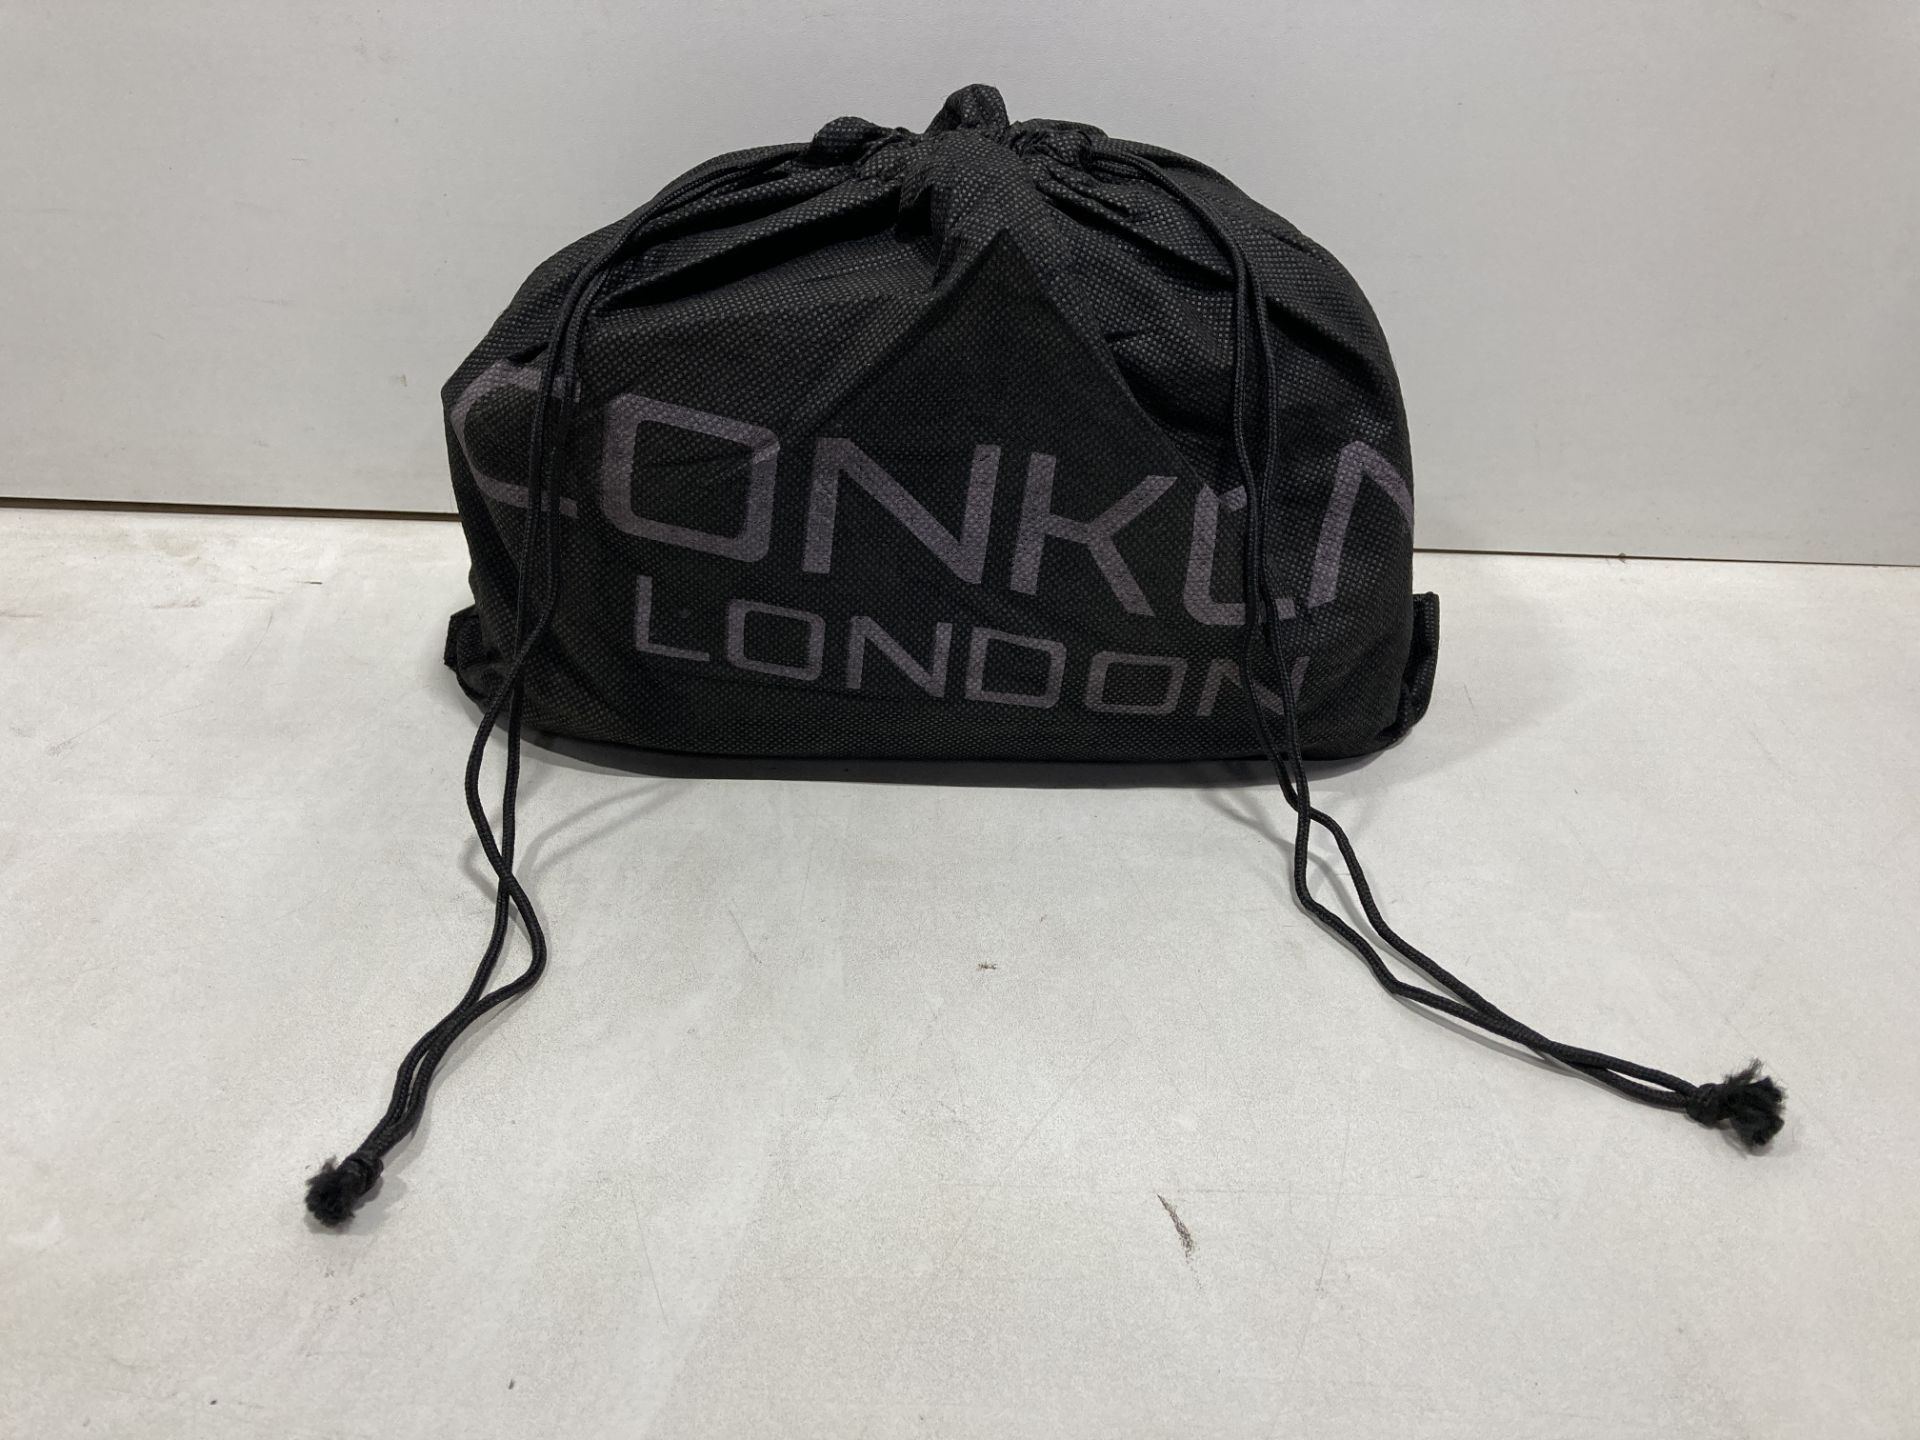 Conka London Rydal Hide Washbag | Malt Brown | RRP £50.00 - Image 5 of 5